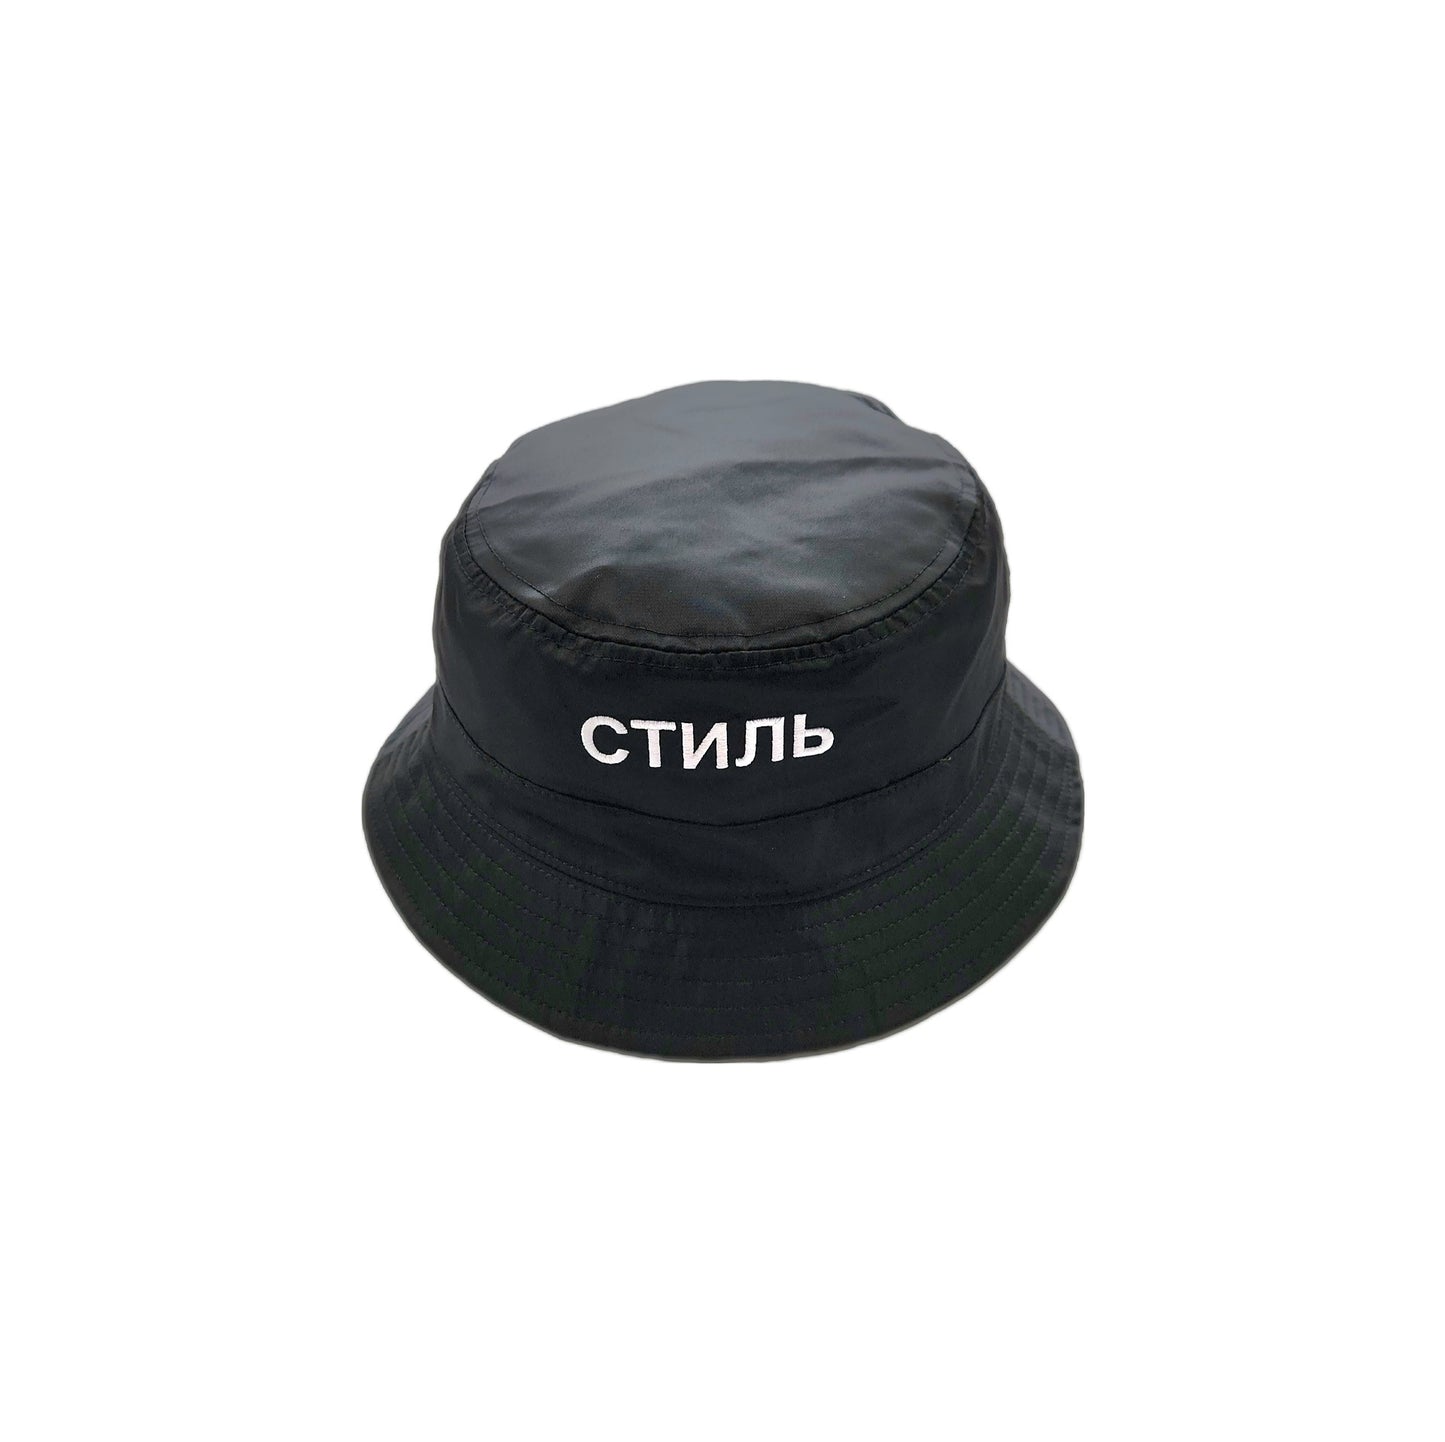 CTNMB  BUCKET HAT